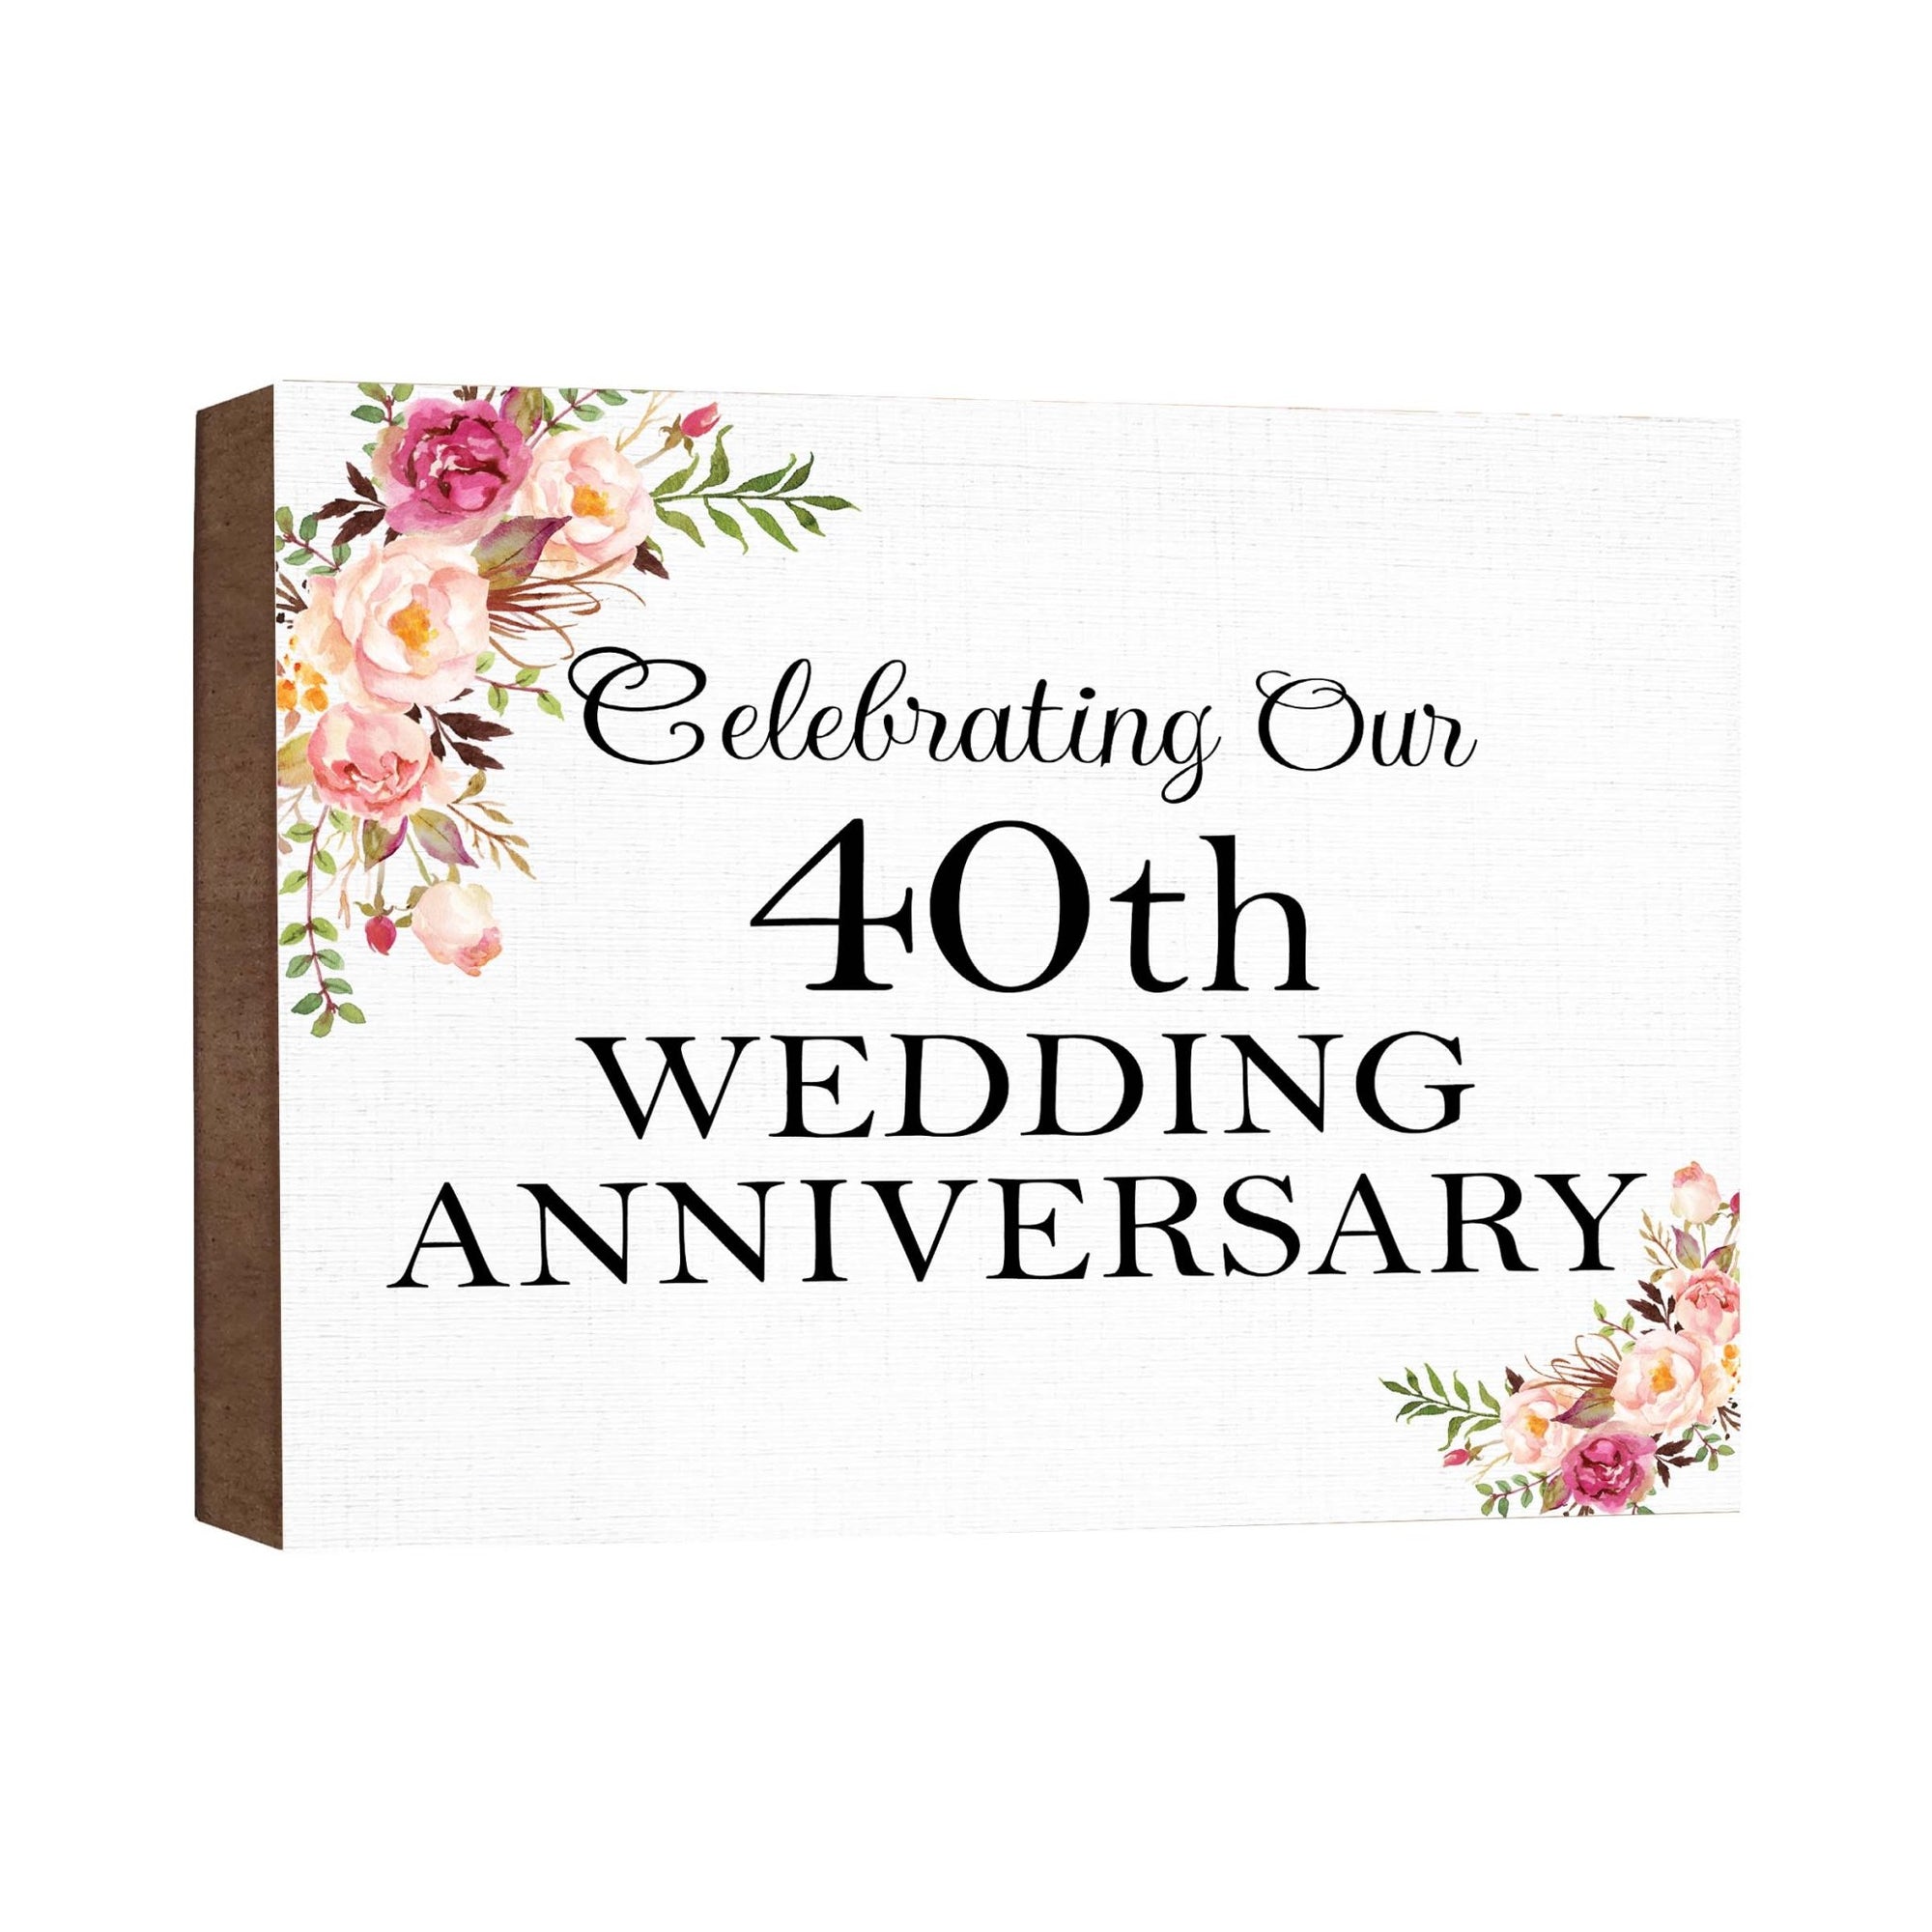 40th Wedding Anniversary Wall Plaque - Celebrating - LifeSong Milestones